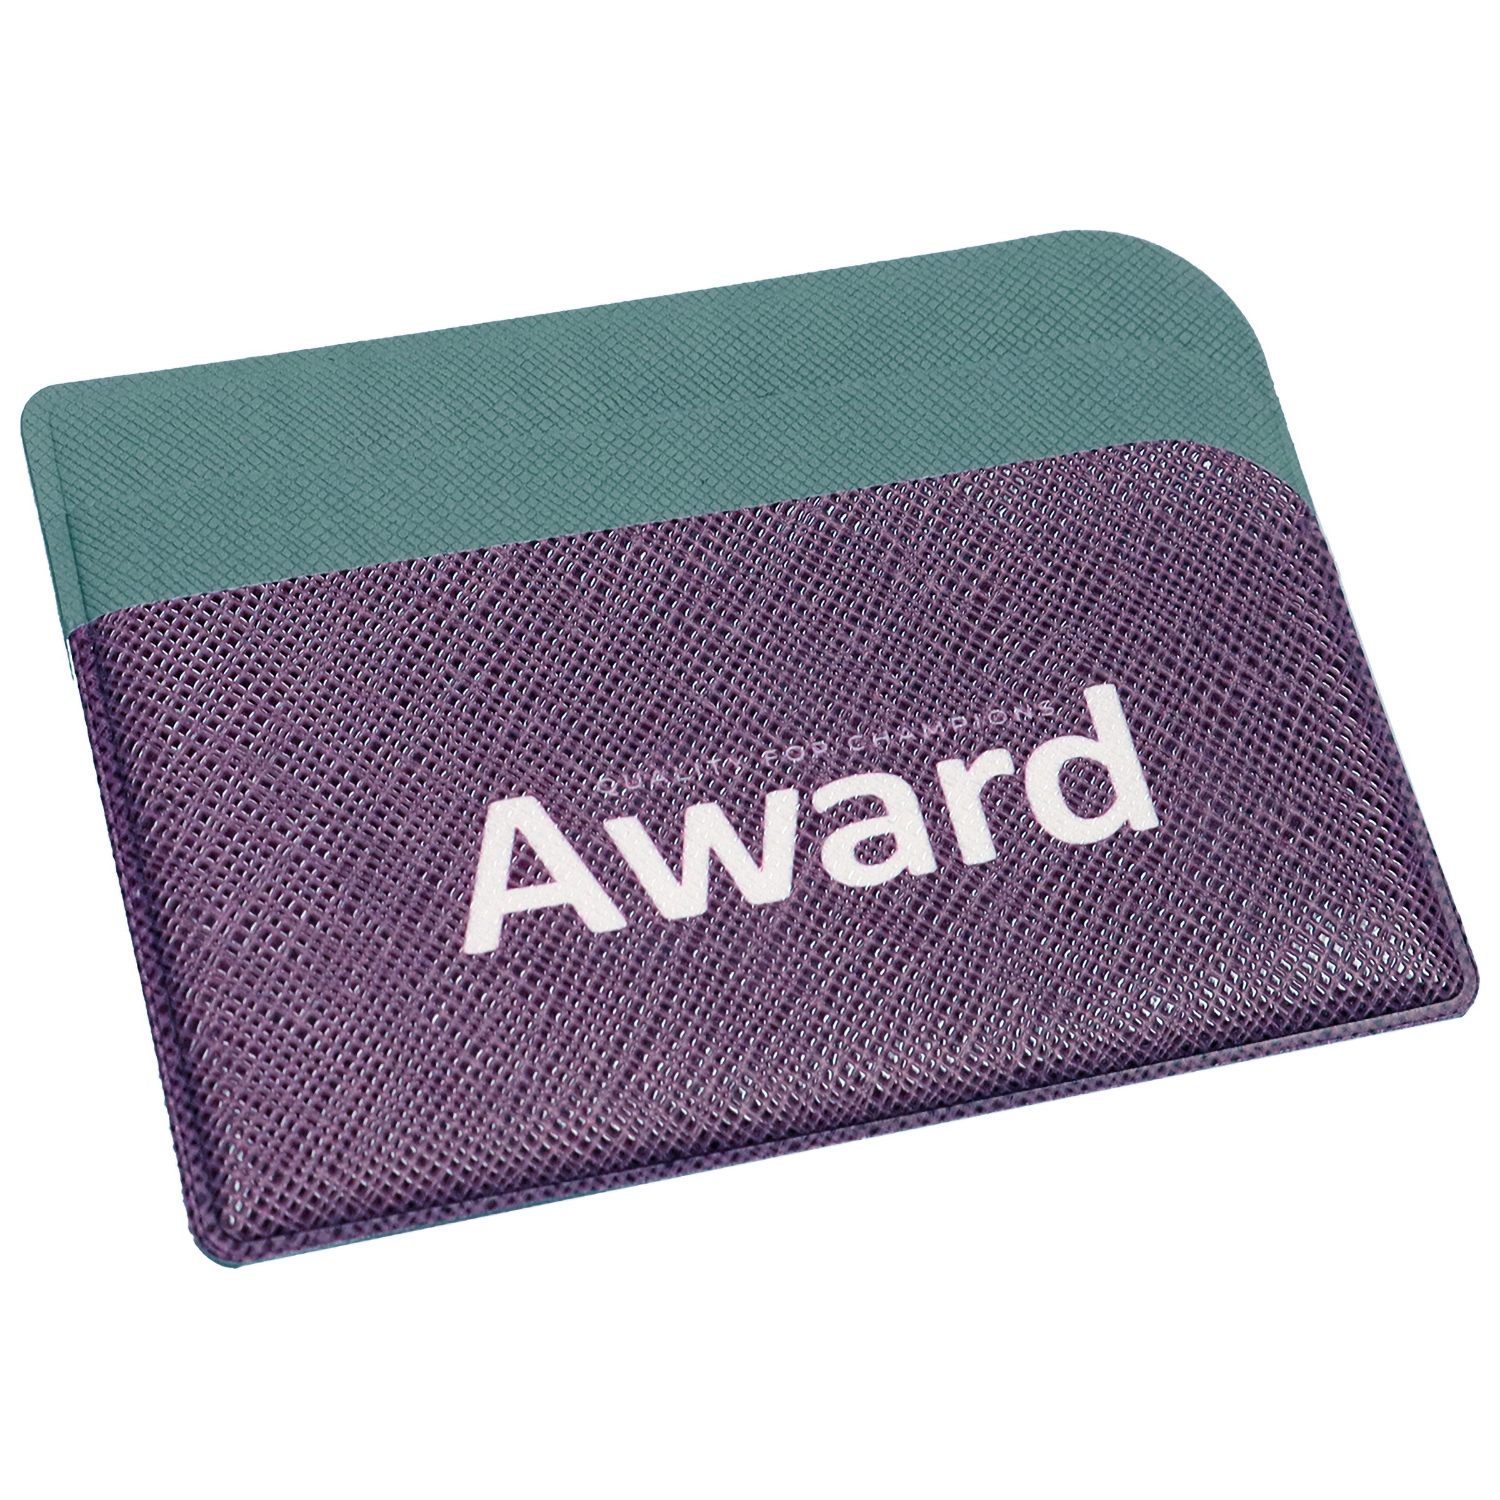 Award картхолдер с логотипом «Award»